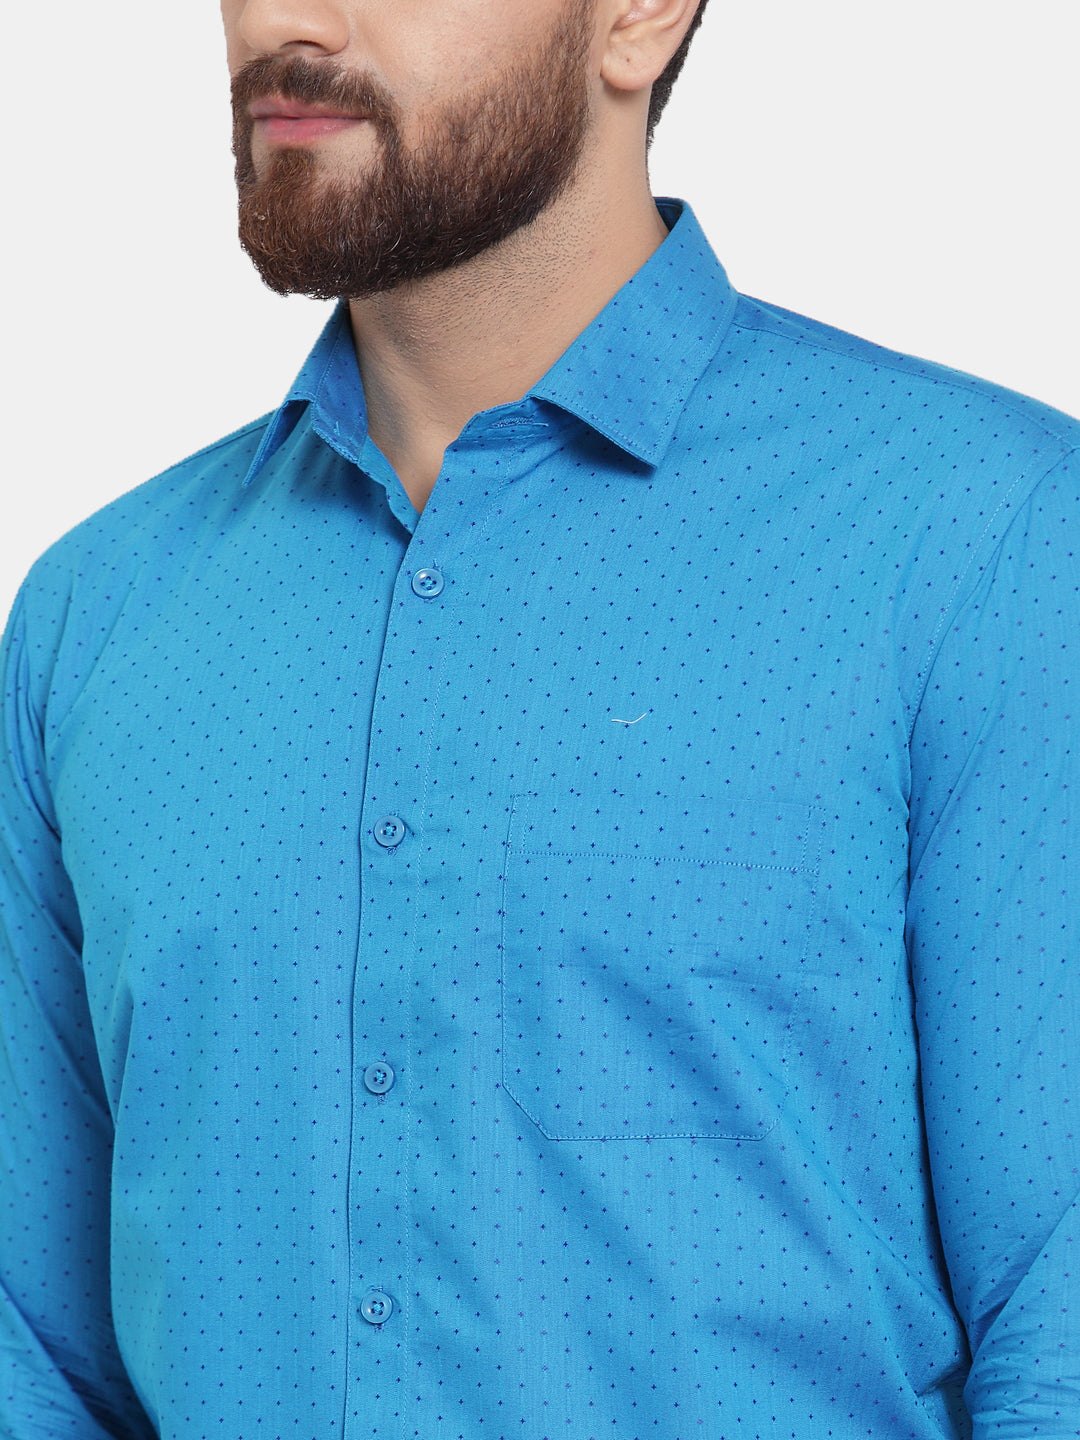 Men's Blue Cotton Polka Dots Formal Shirts ( SF 739Sky ) - Jainish